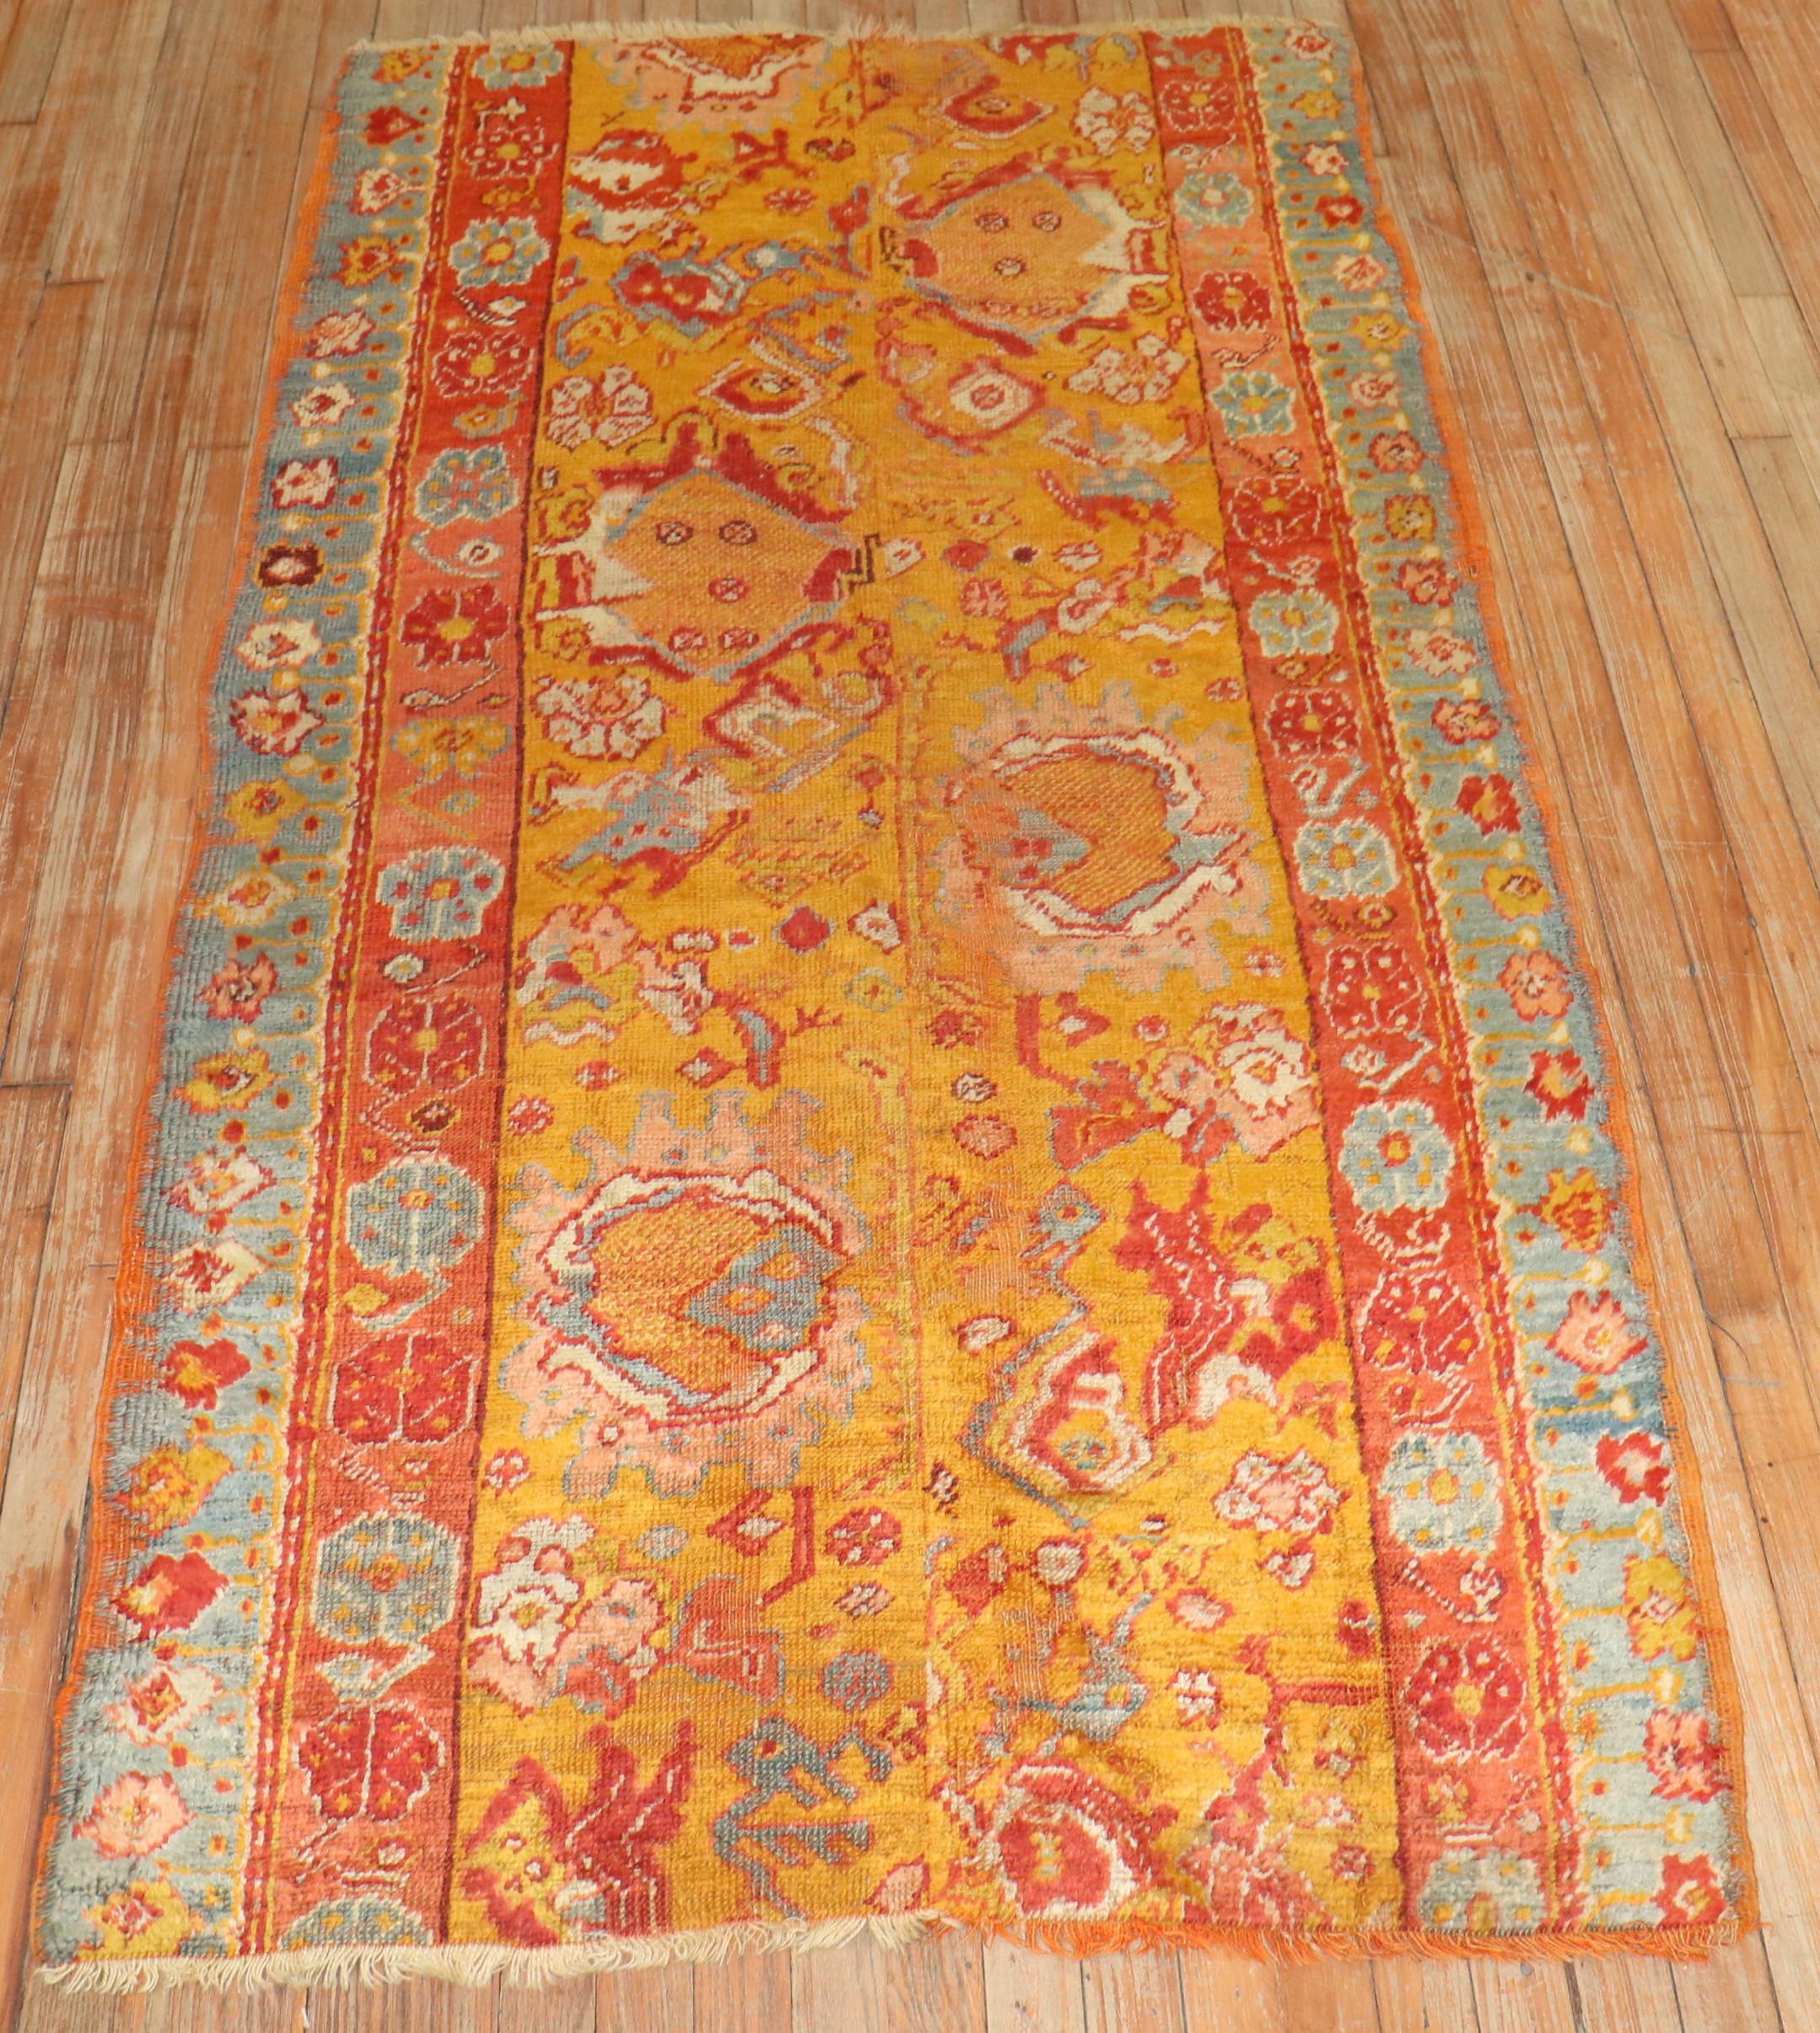 Angora Oushak Fragment-Teppich aus der Zabihi-Kollektion Angora (Hollywood Regency)